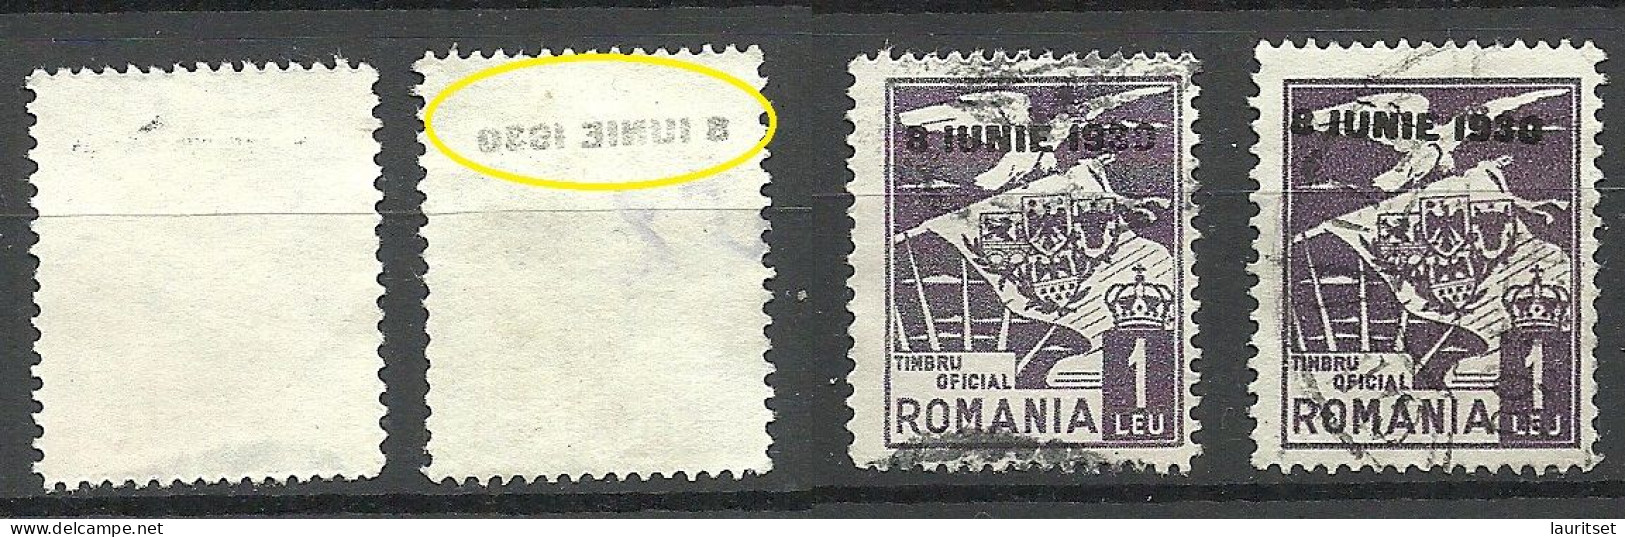 ROMANIA Rumänien 1930 Dienstmarke Normal + Variety Set Off Of OPT Abklatsch D. Aufdruckes - Dienstmarken